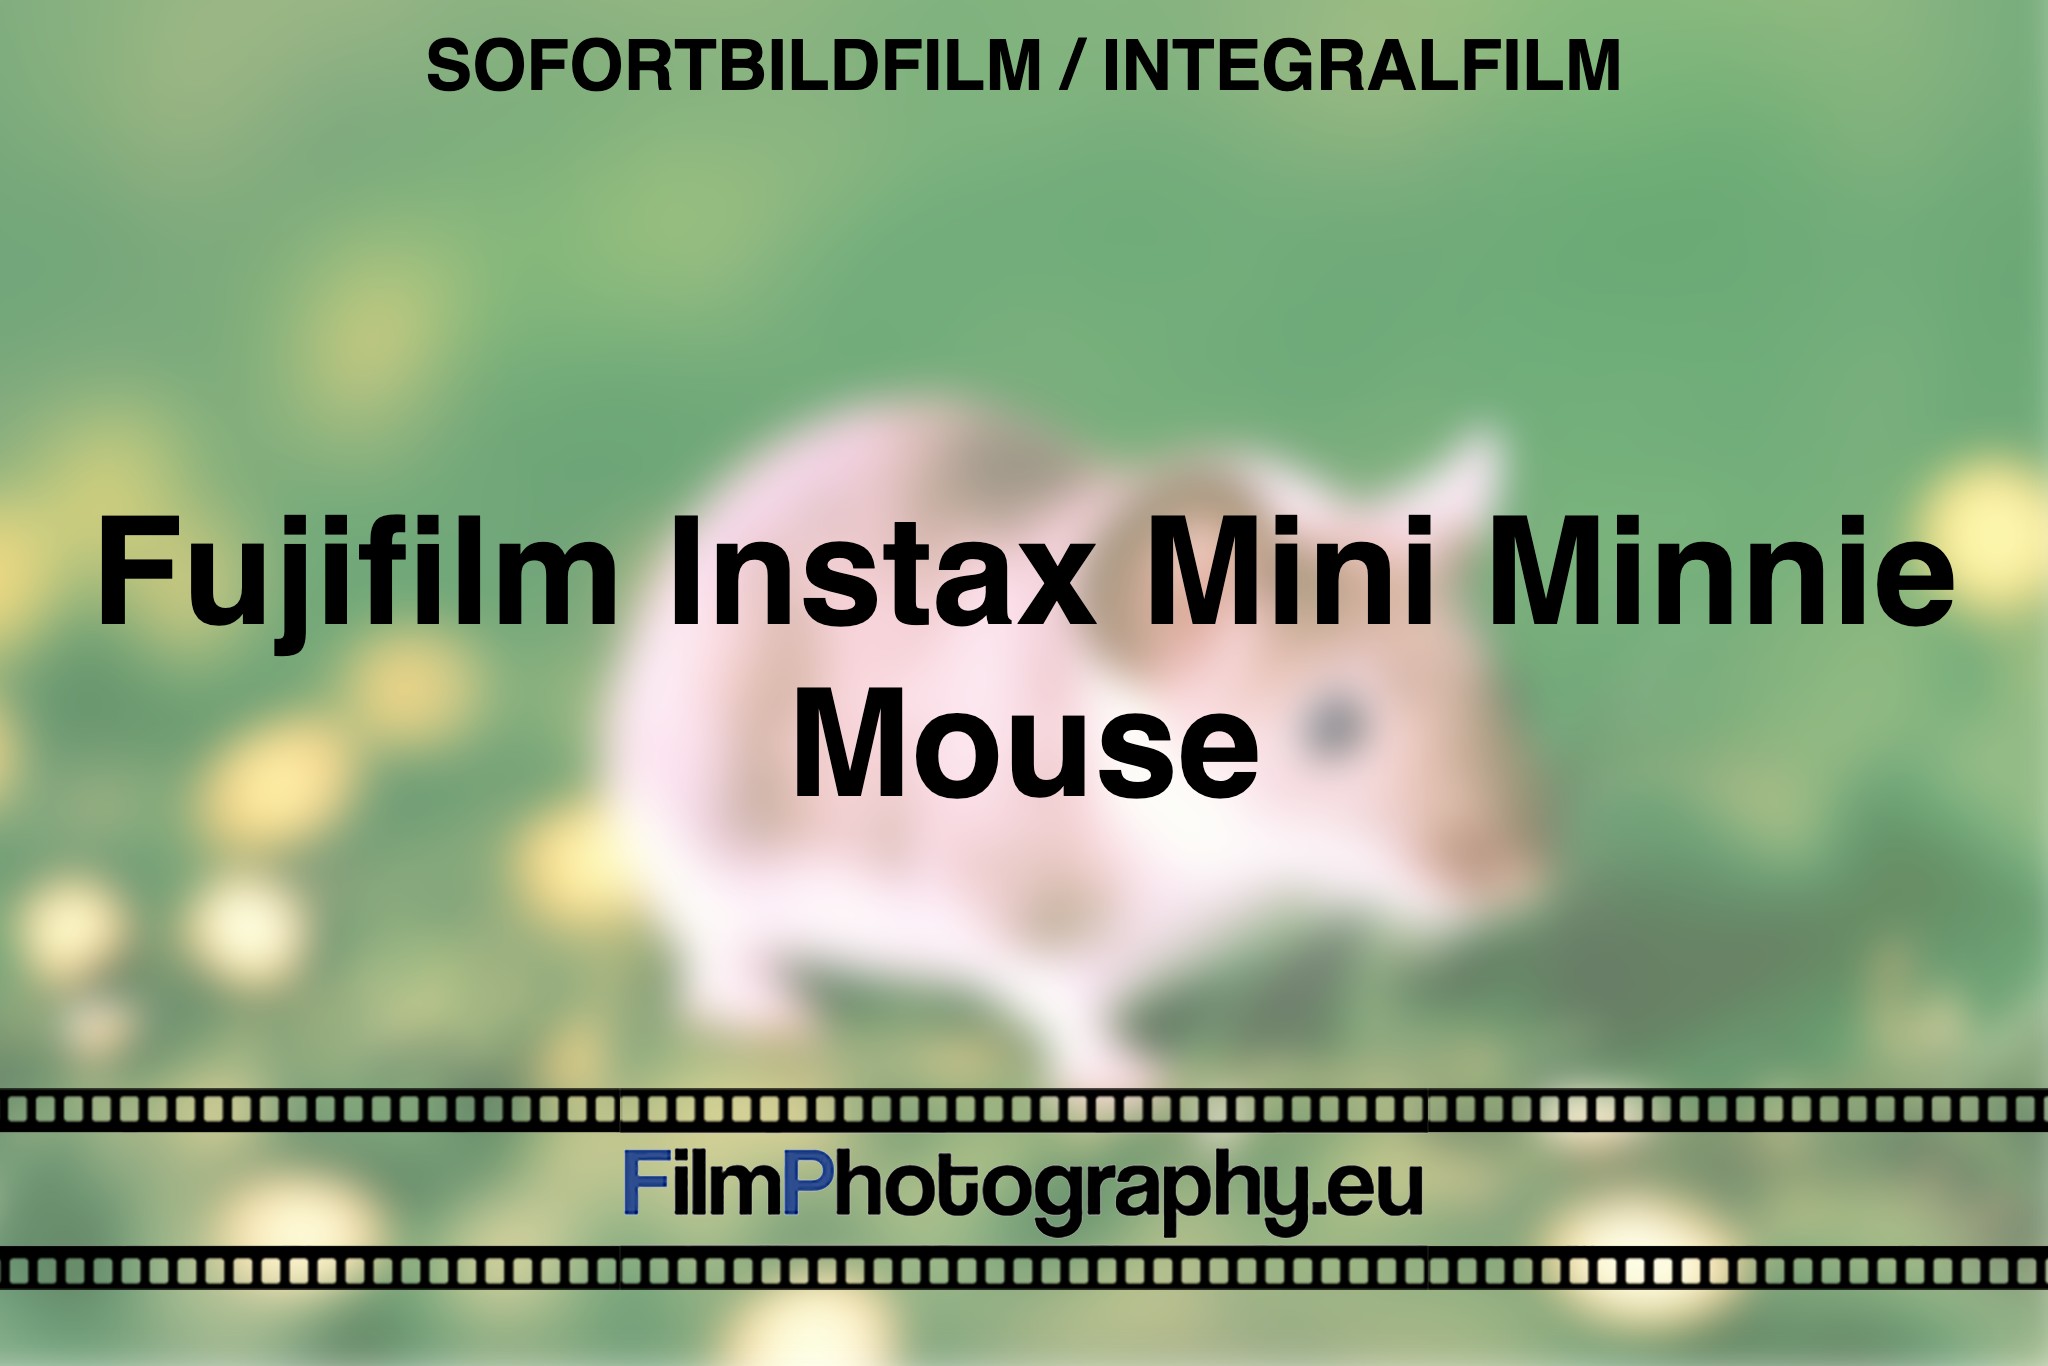 fujifilm-instax-mini-minnie-mouse-sofortbildfilm-integralfilm-fp-bnv